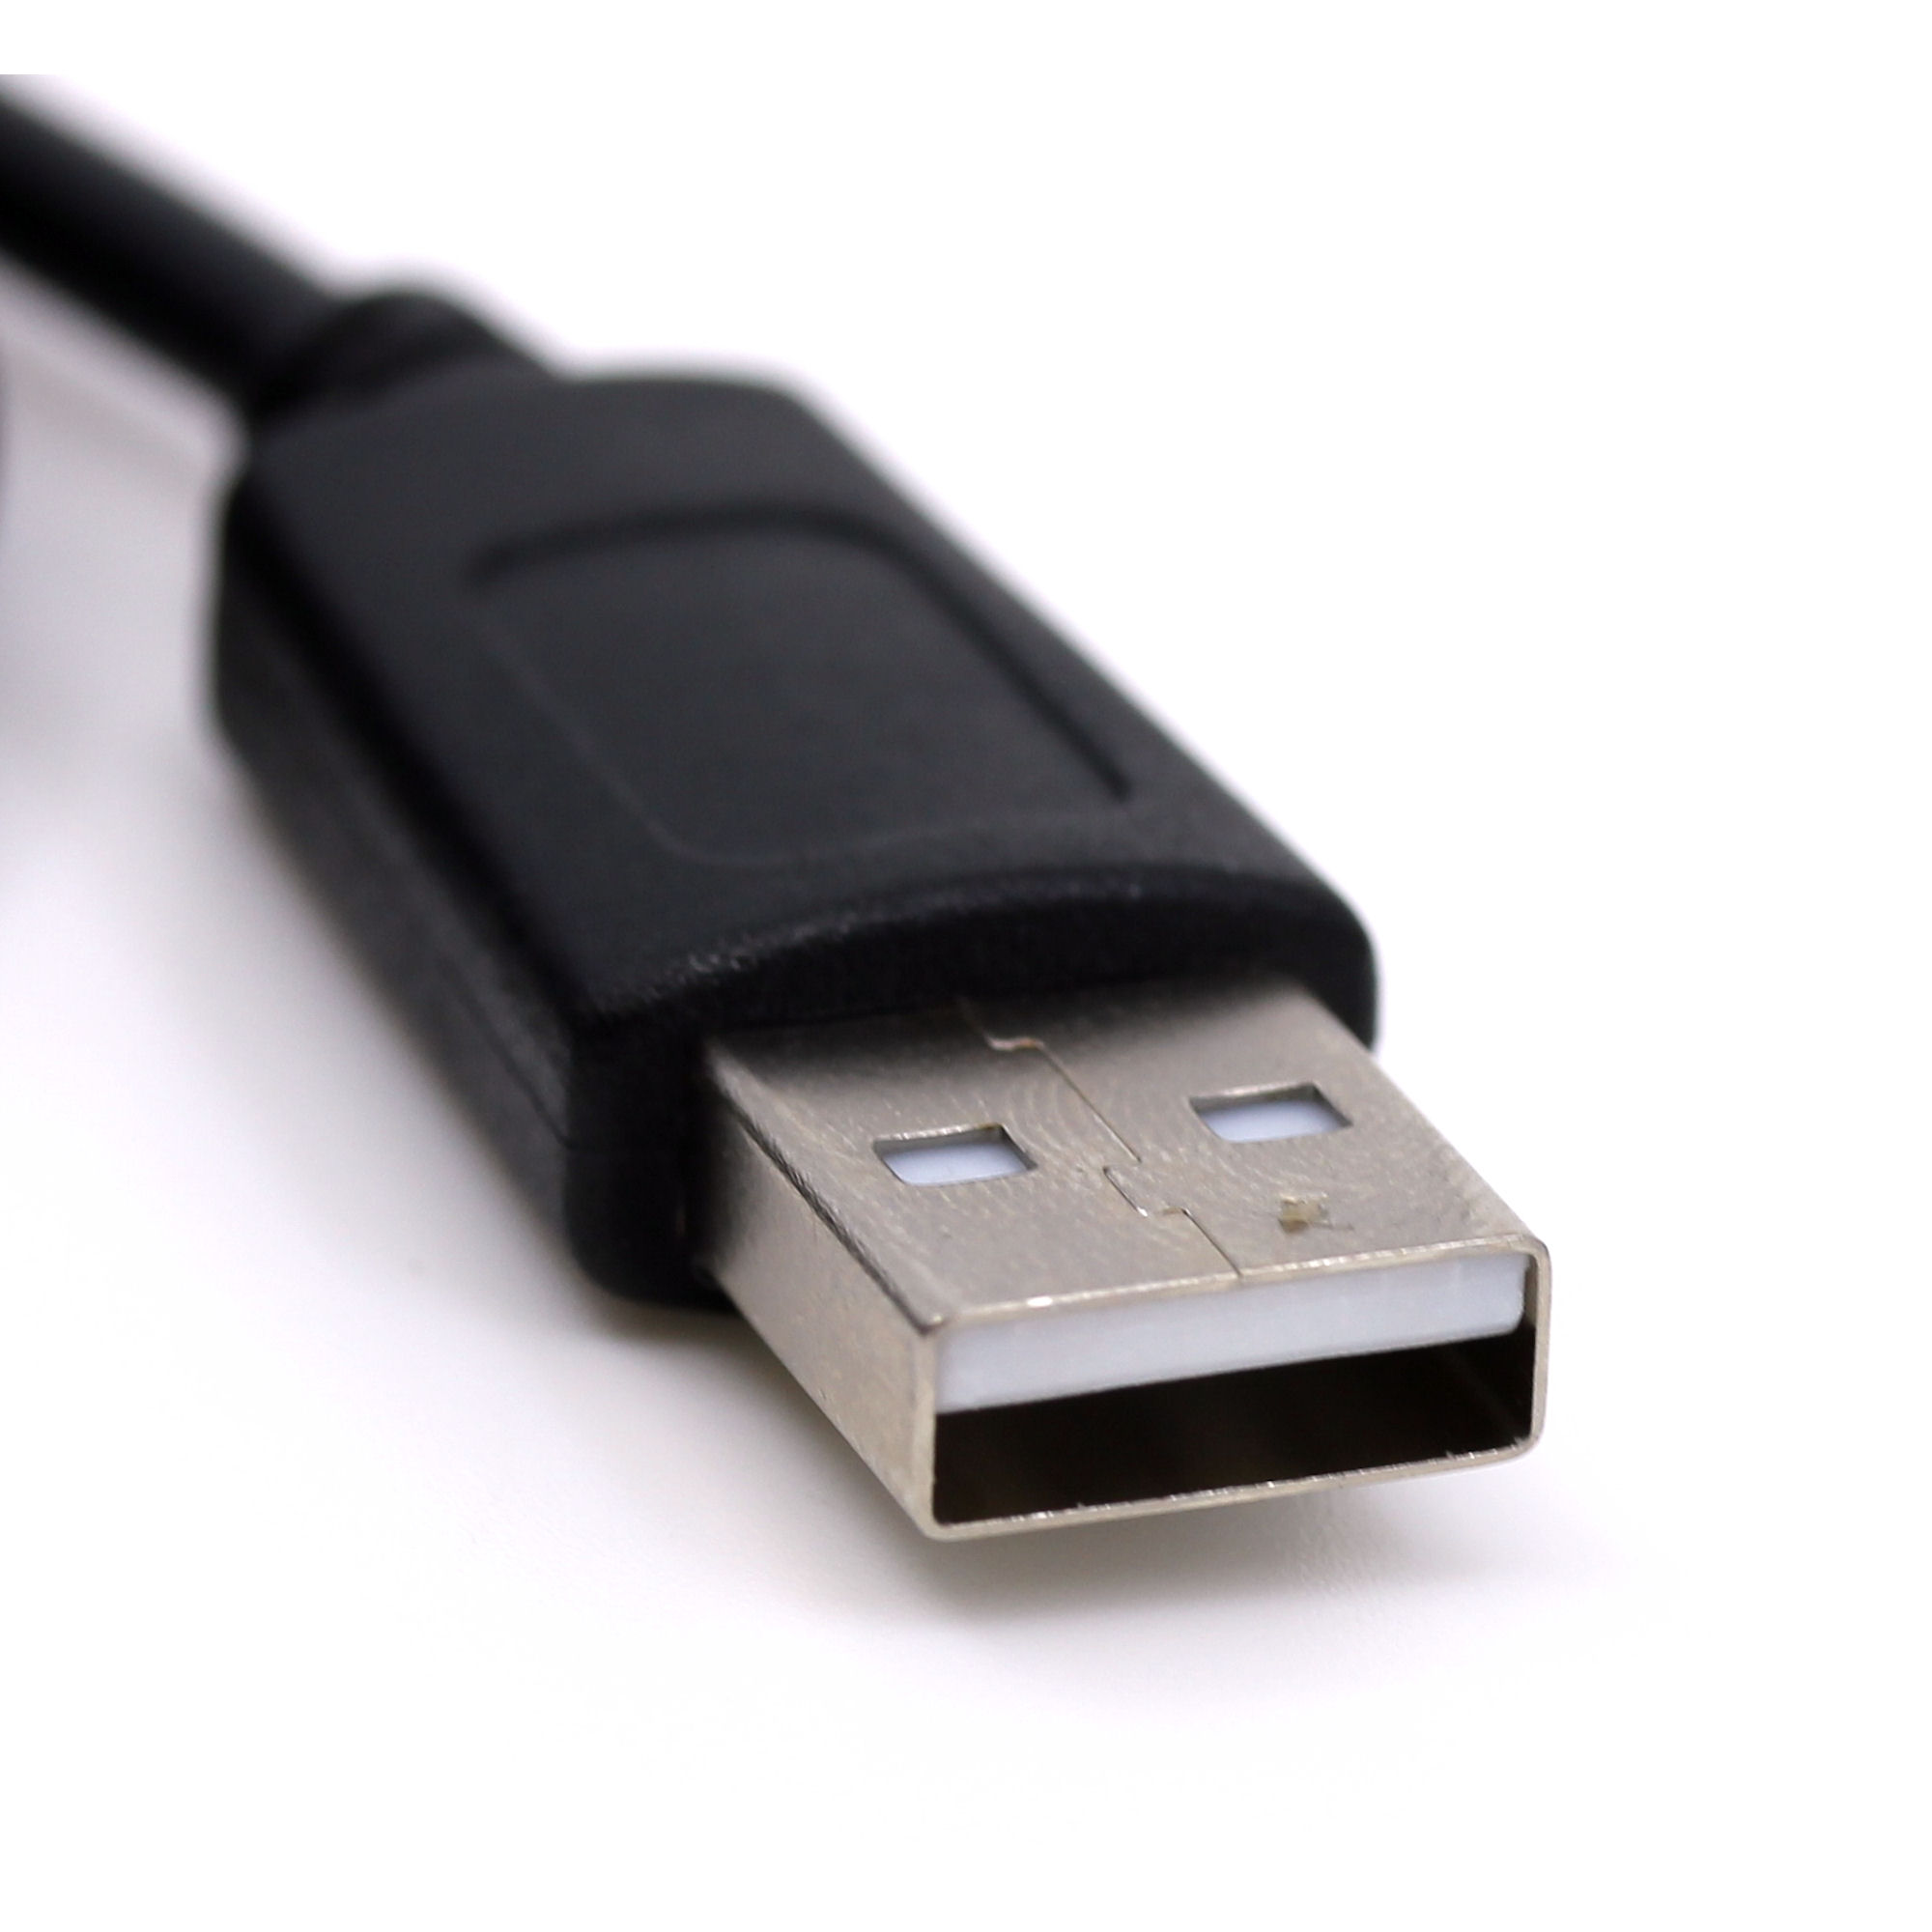 USB Ladekabel für Sony Playstation 4, PS4, PS4 Slim, PS4 Pro Controller